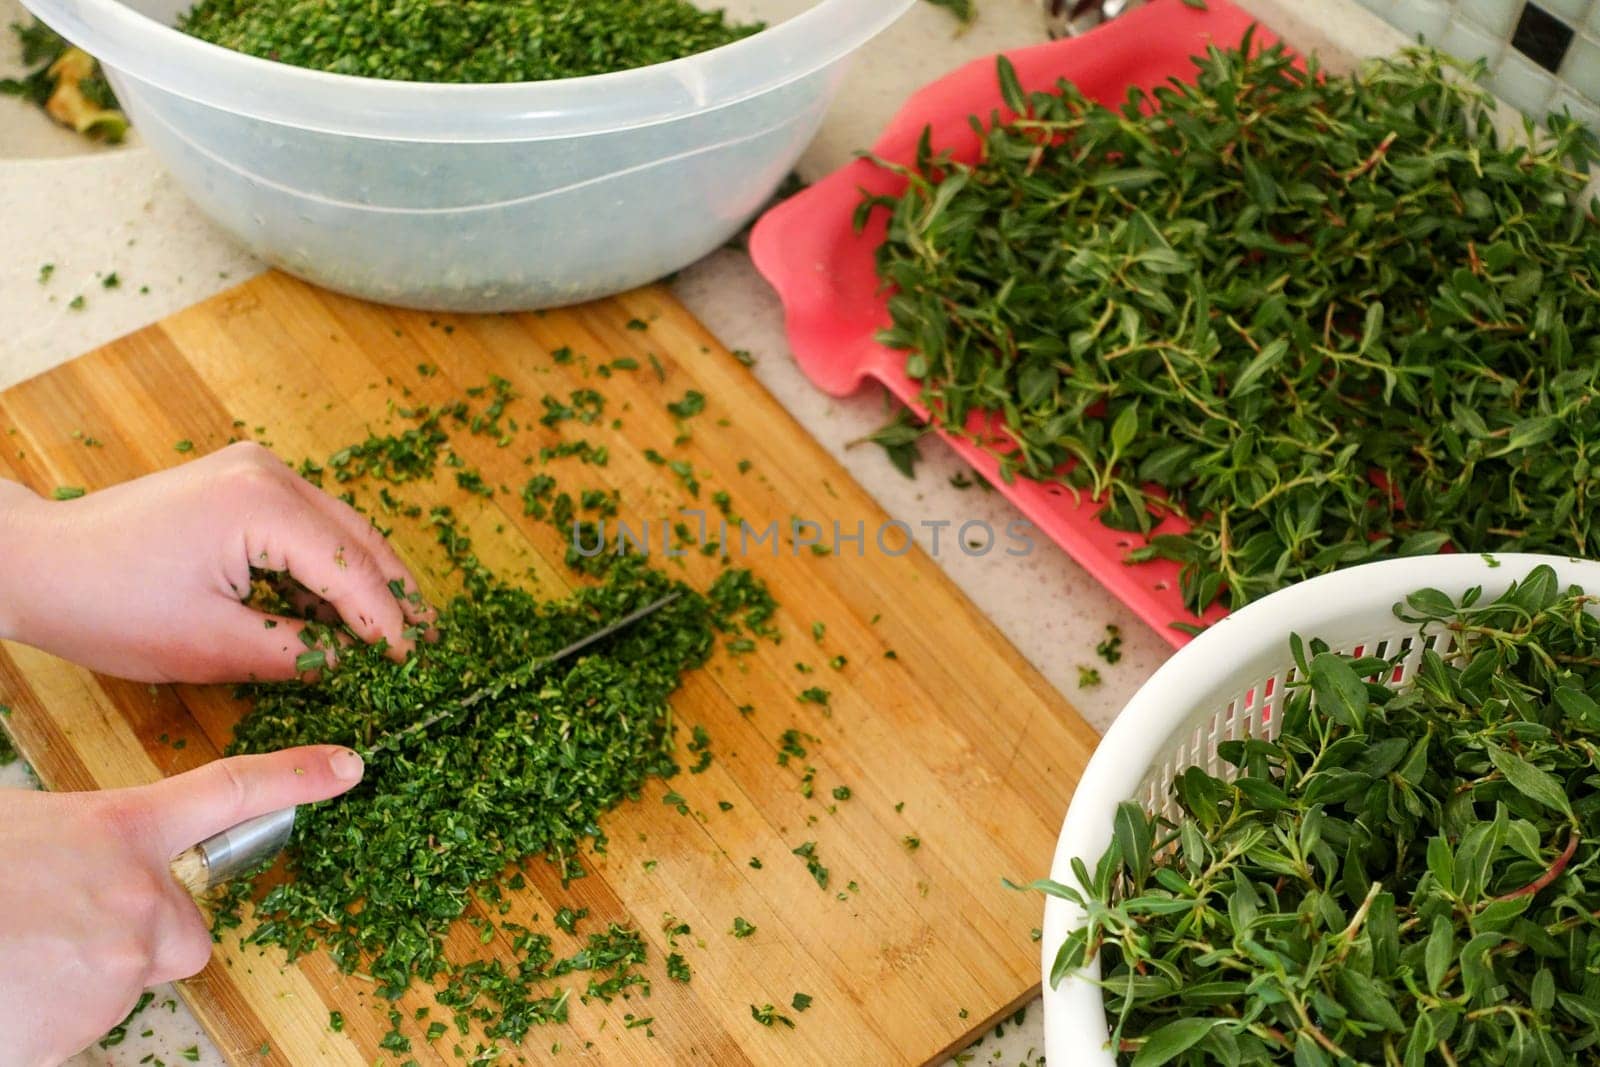 In Turkey, chopping madımak grass from herbal food, Madımak grass for yozgat madımak dish, by nhatipoglu